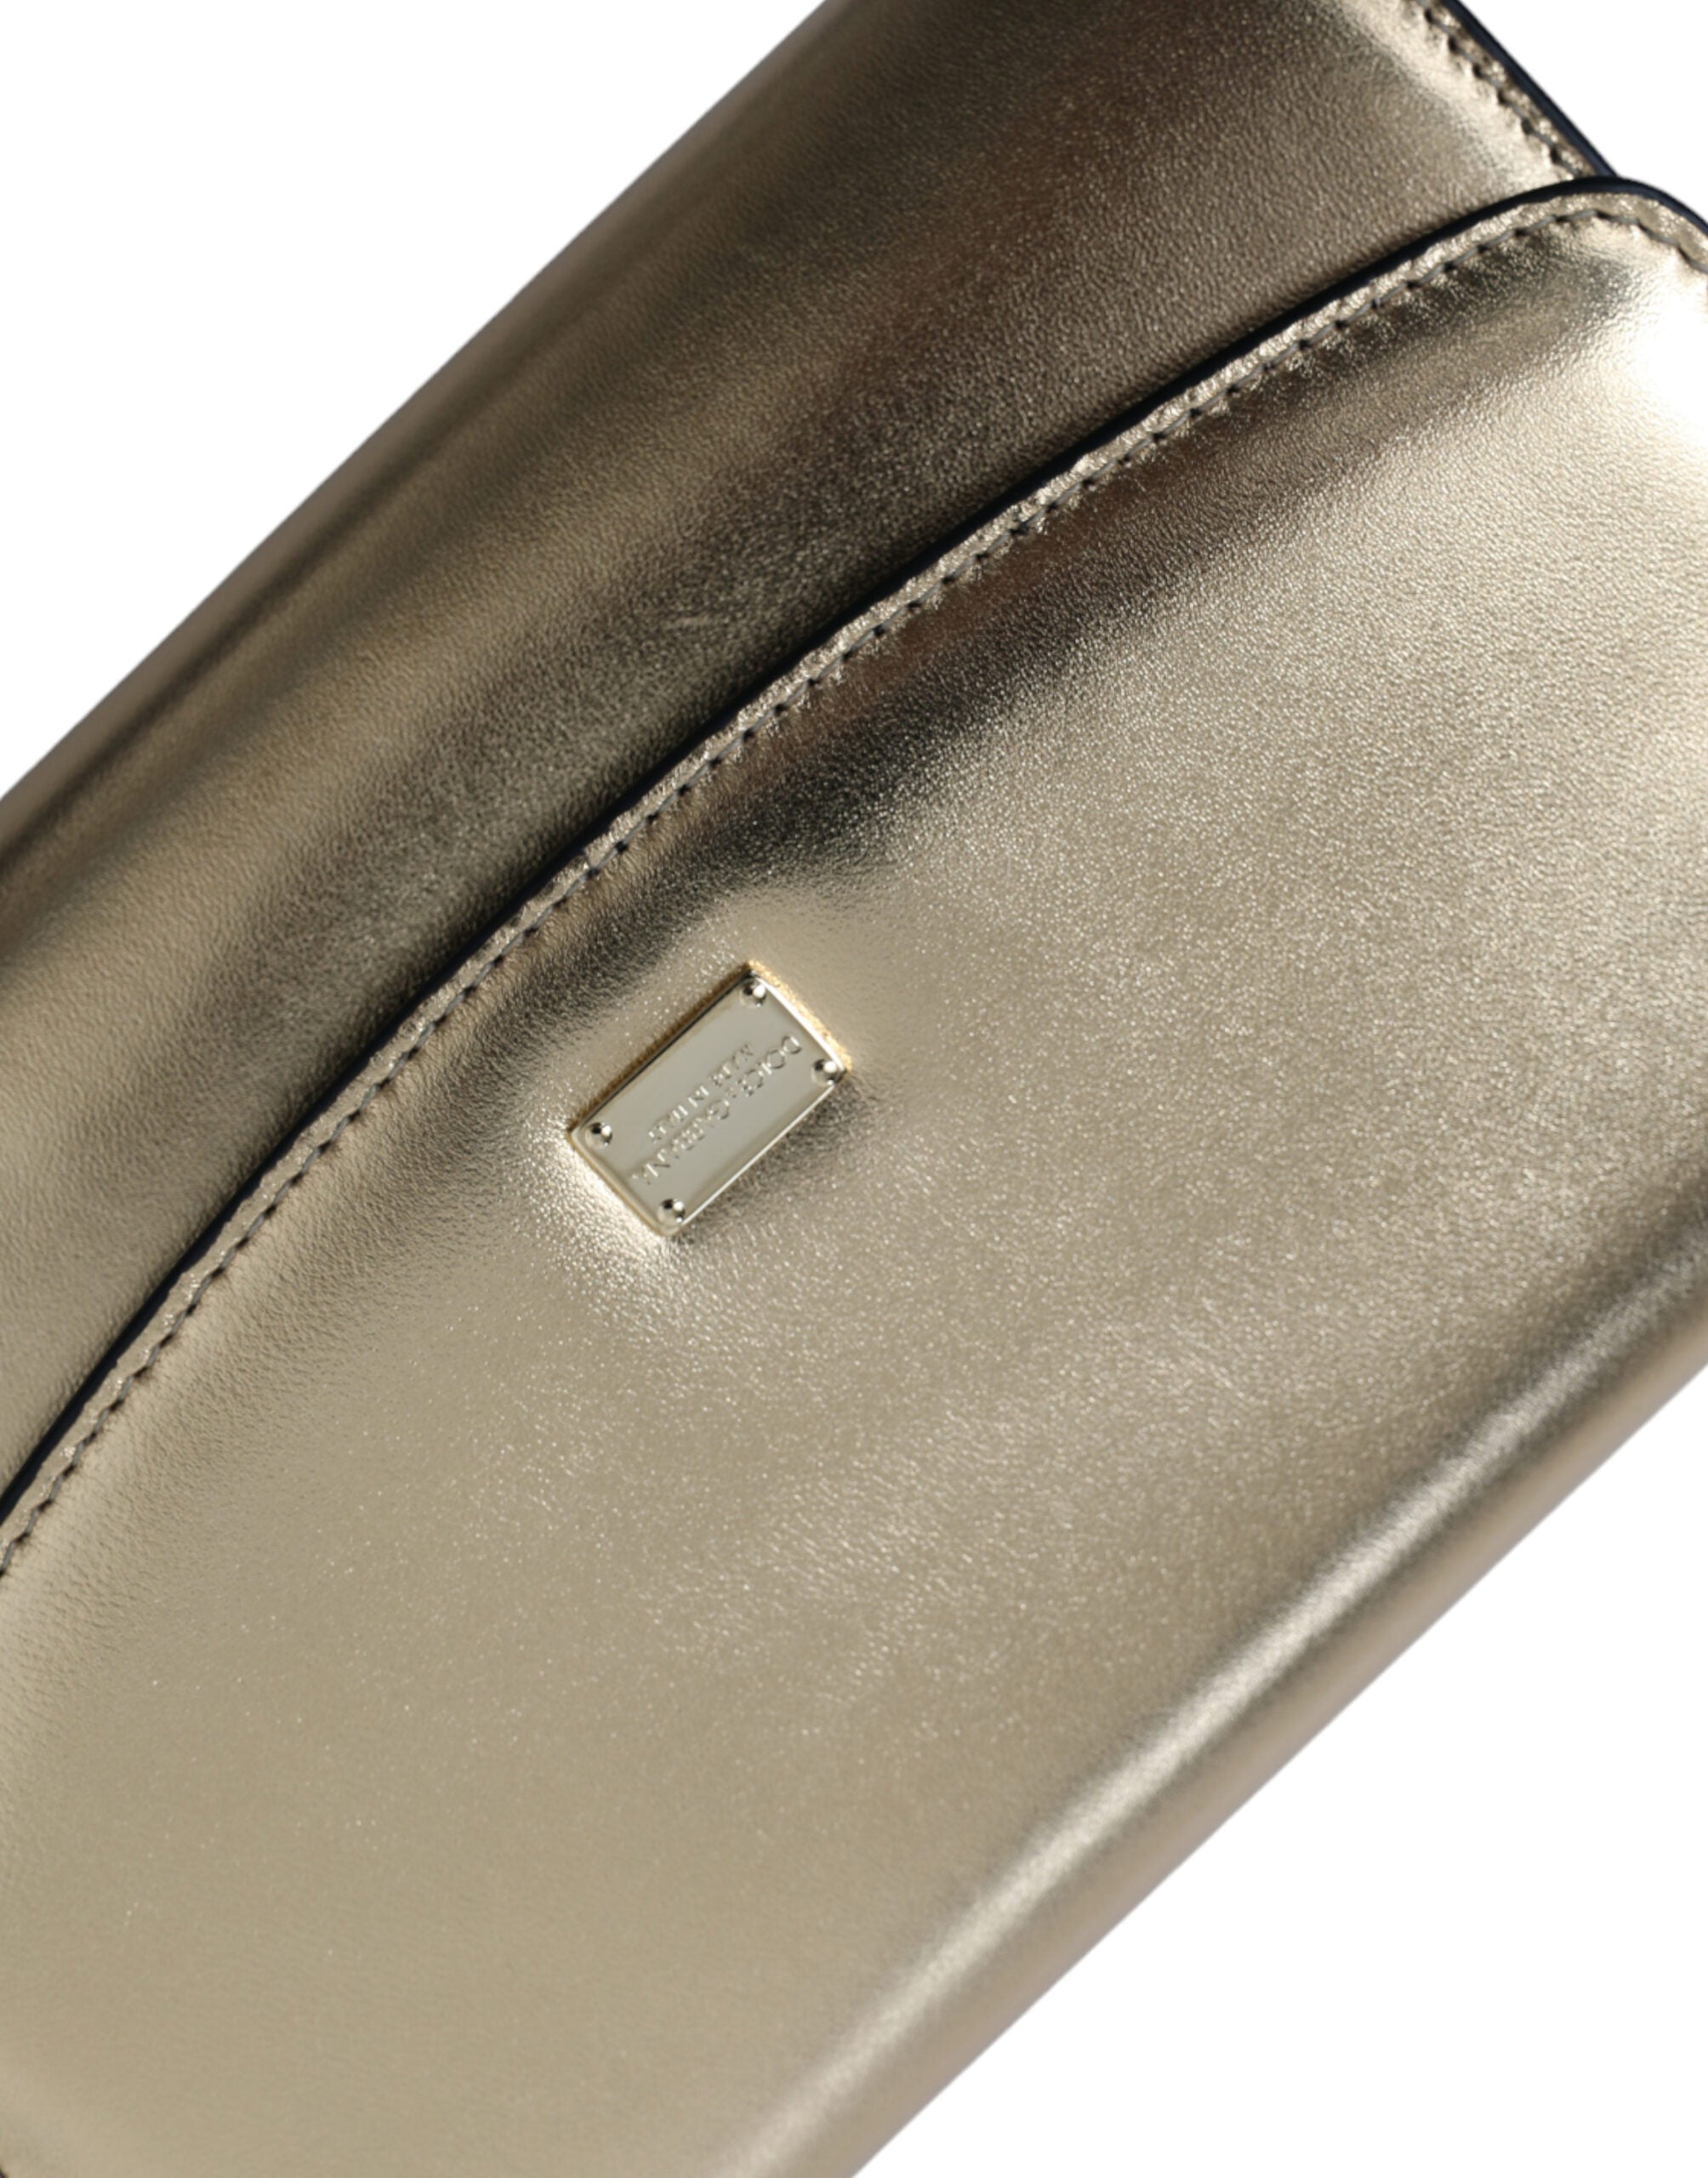 Dolce & Gabbana Metallic Gold Lambskin Leather Crossbody Mini Bag